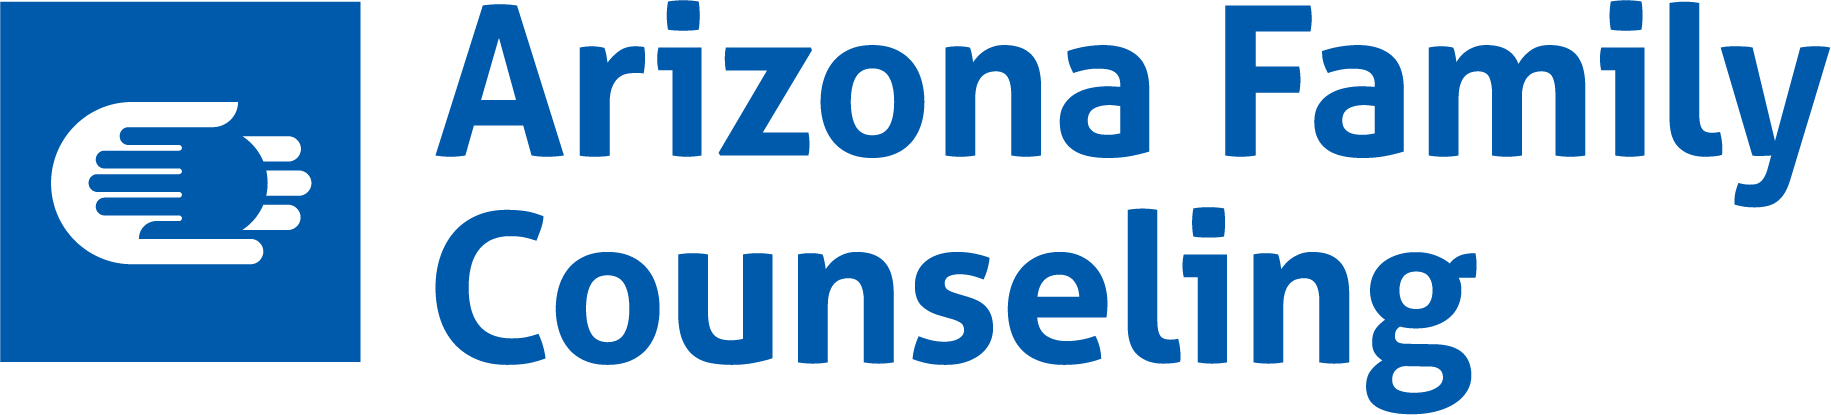 Arizona Family Counseling logo